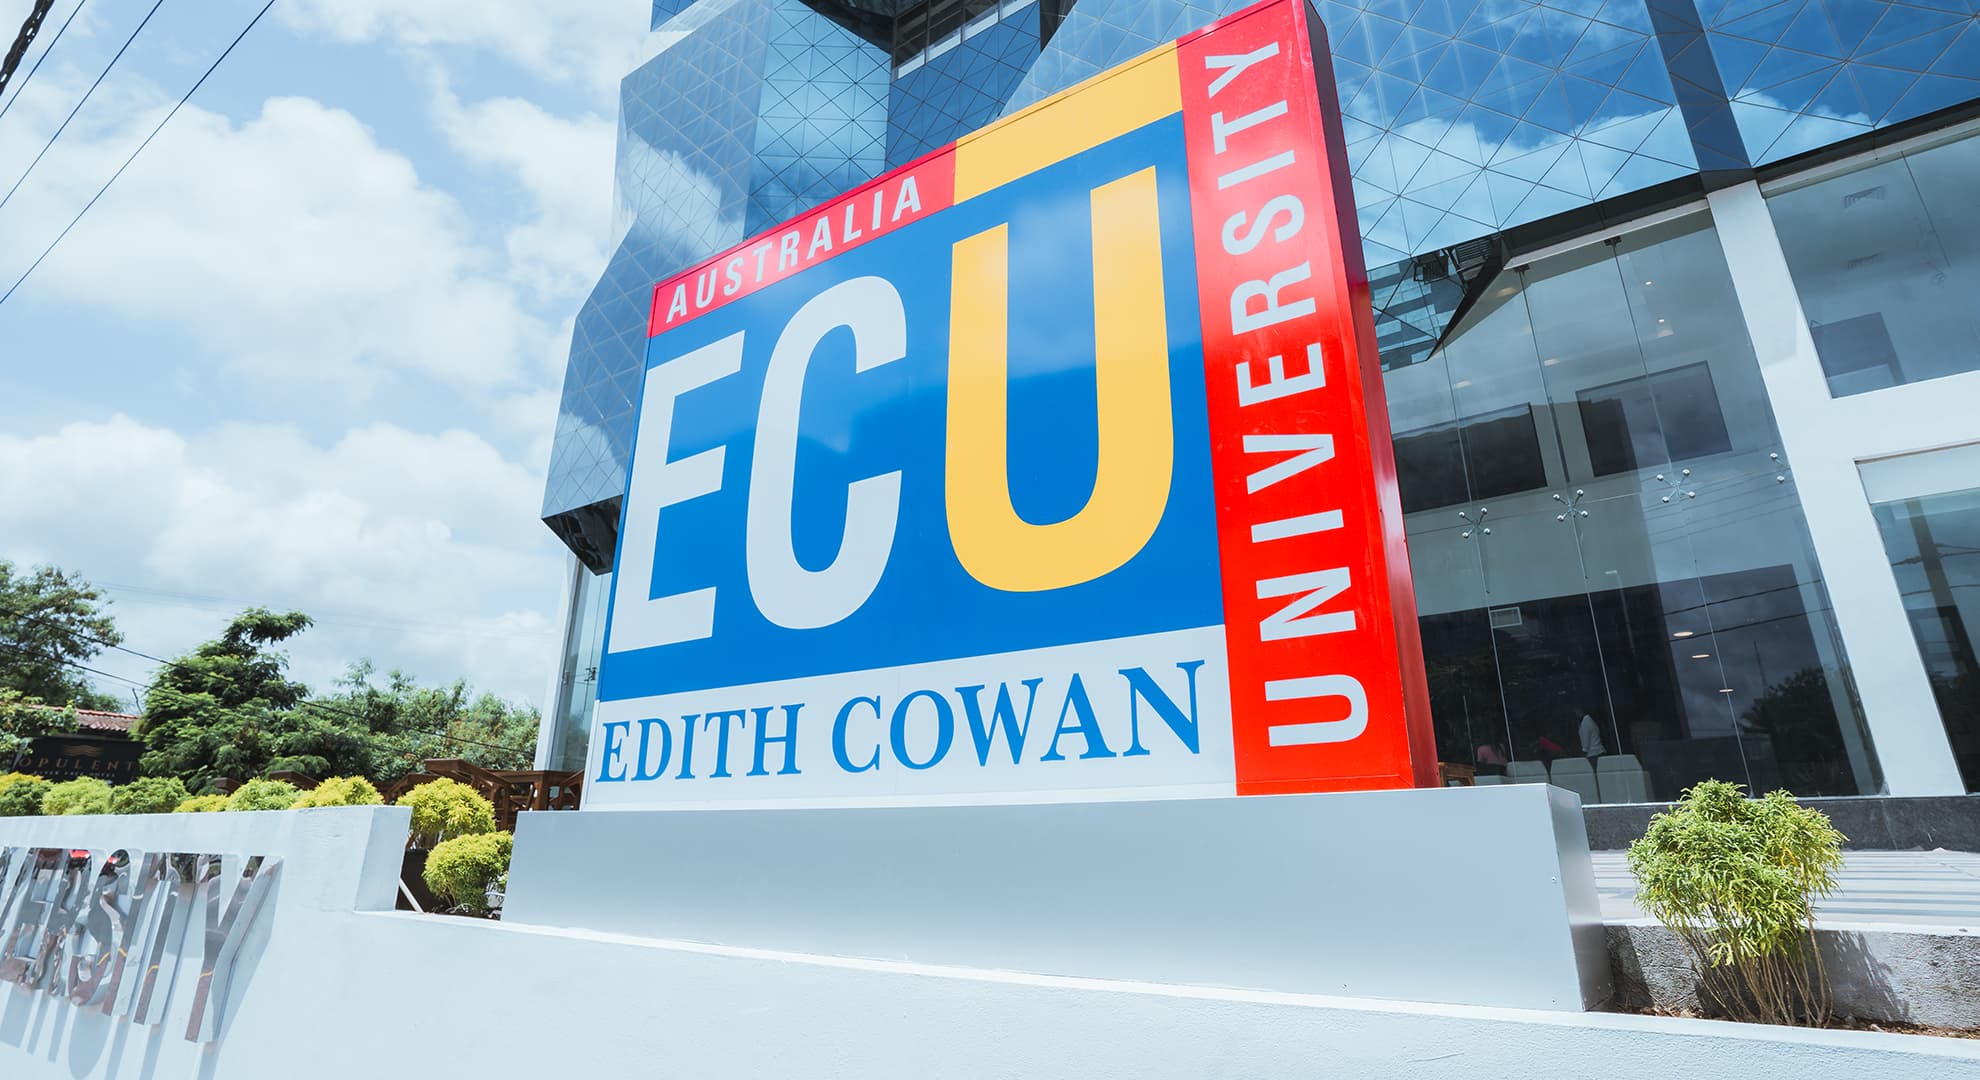 ECU sign on façade of new Sri Lanka campus building